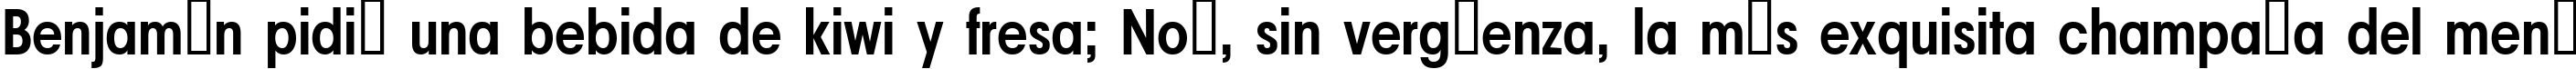 Пример написания шрифтом a_AvanteBsNr Bold текста на испанском